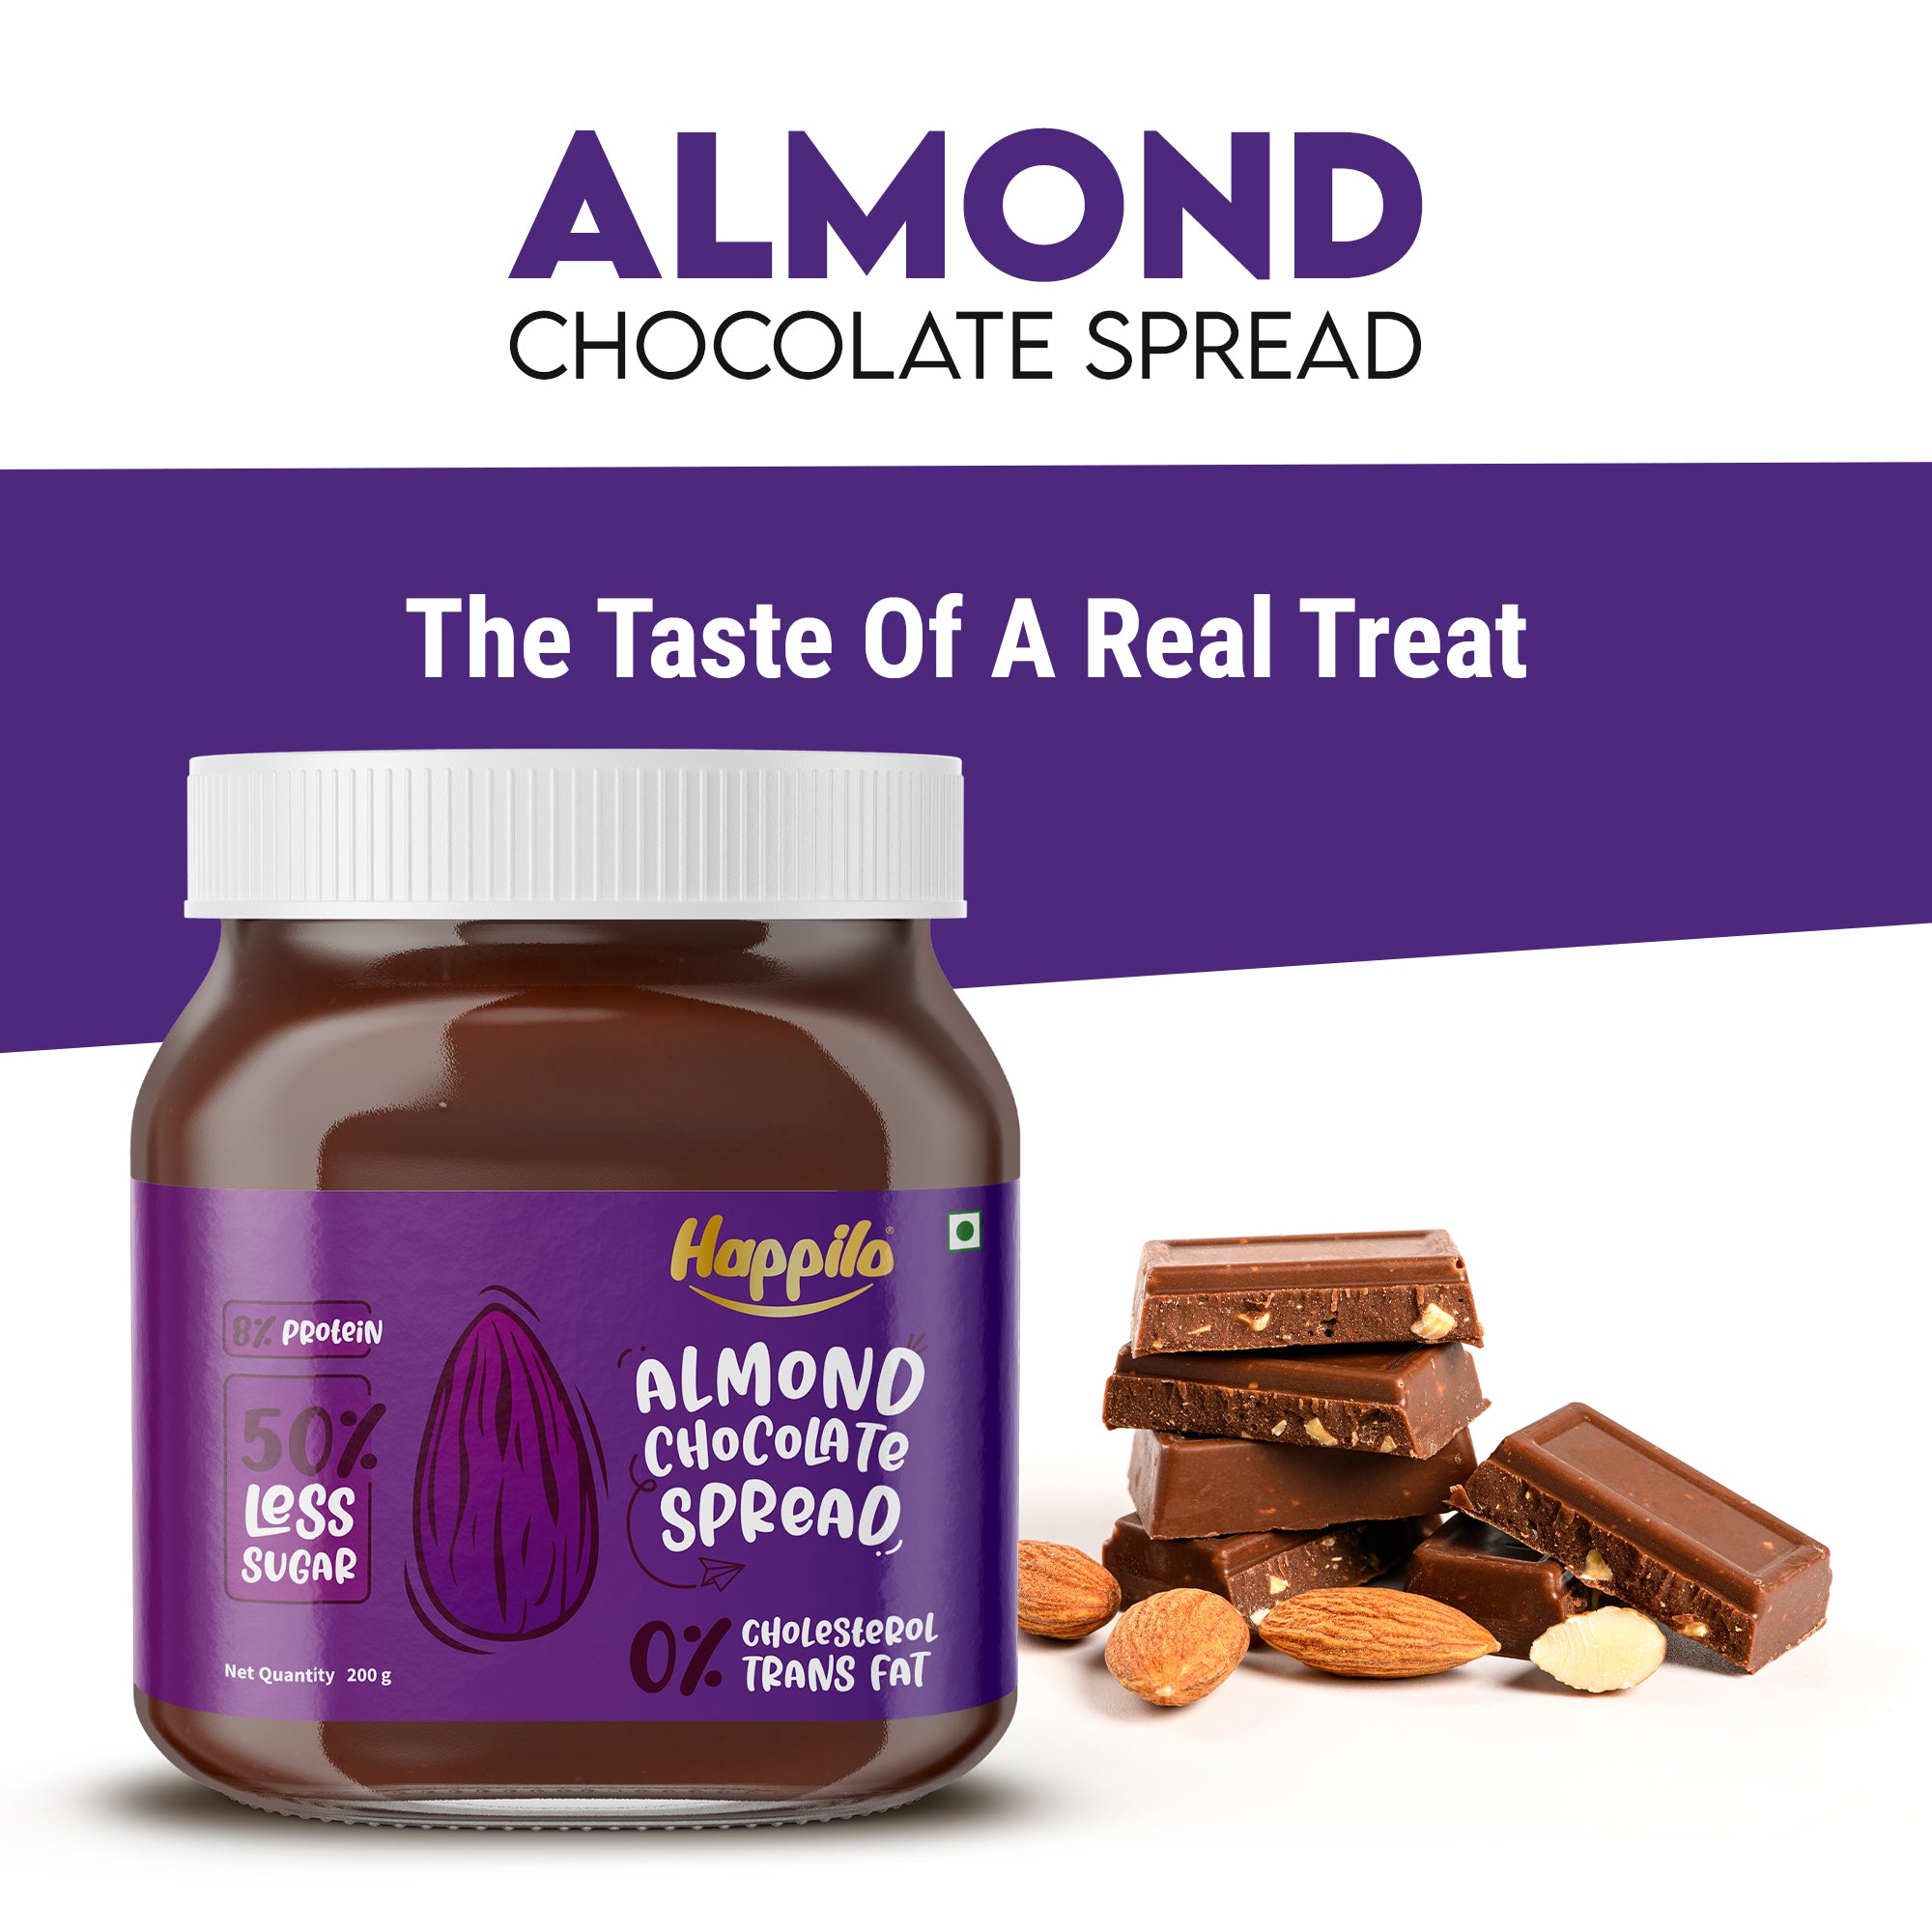 Happilo Chocolate Almond Spread 200g